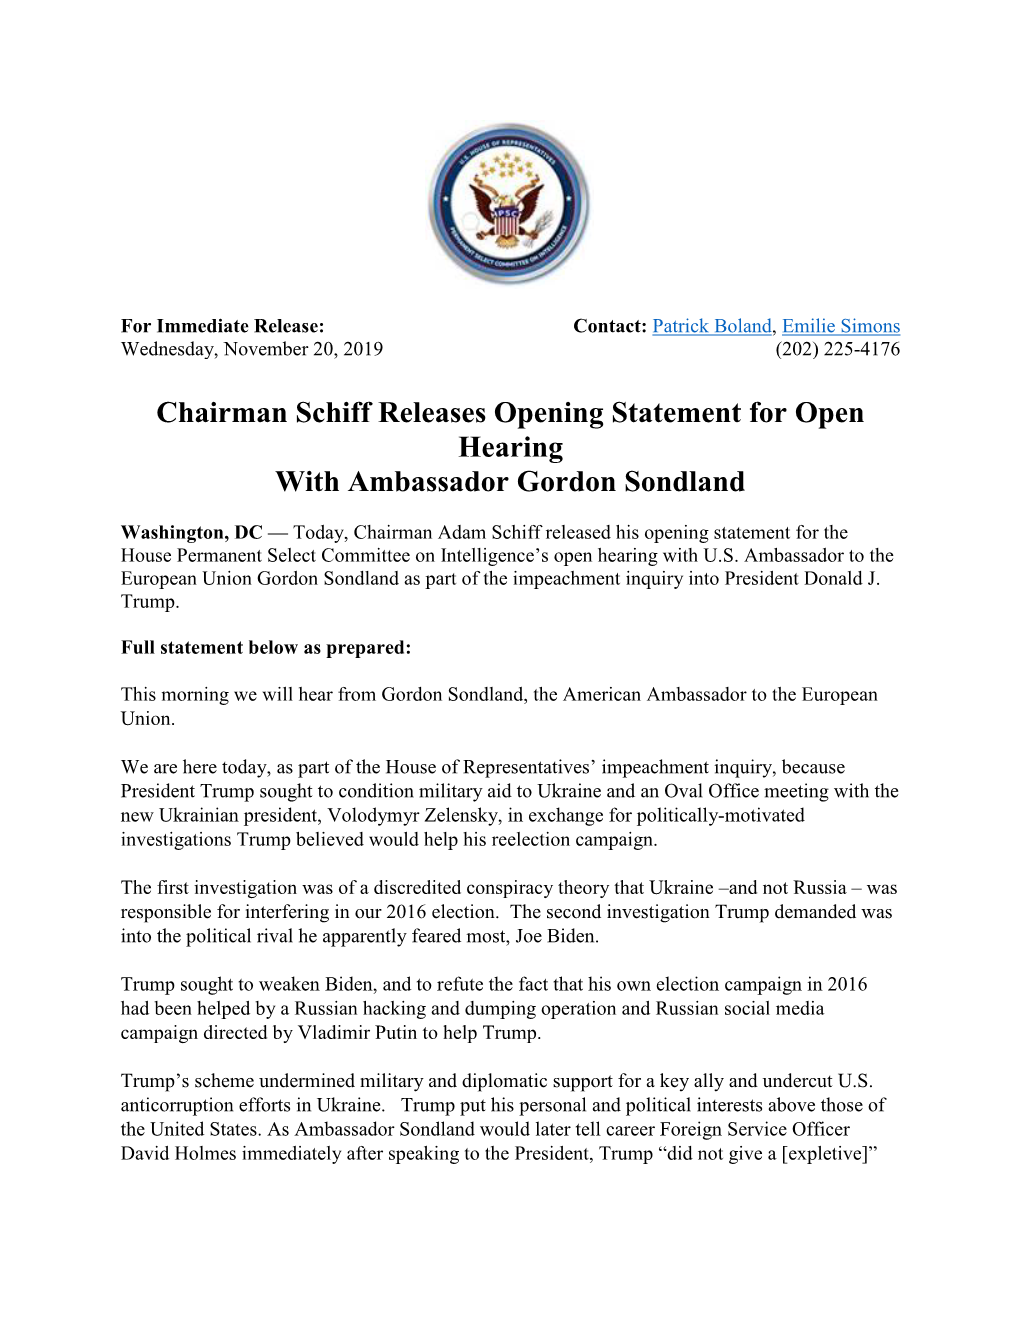 Chairman Schiff Releases Opening Statement for Open Hearing with Ambassador Gordon Sondland